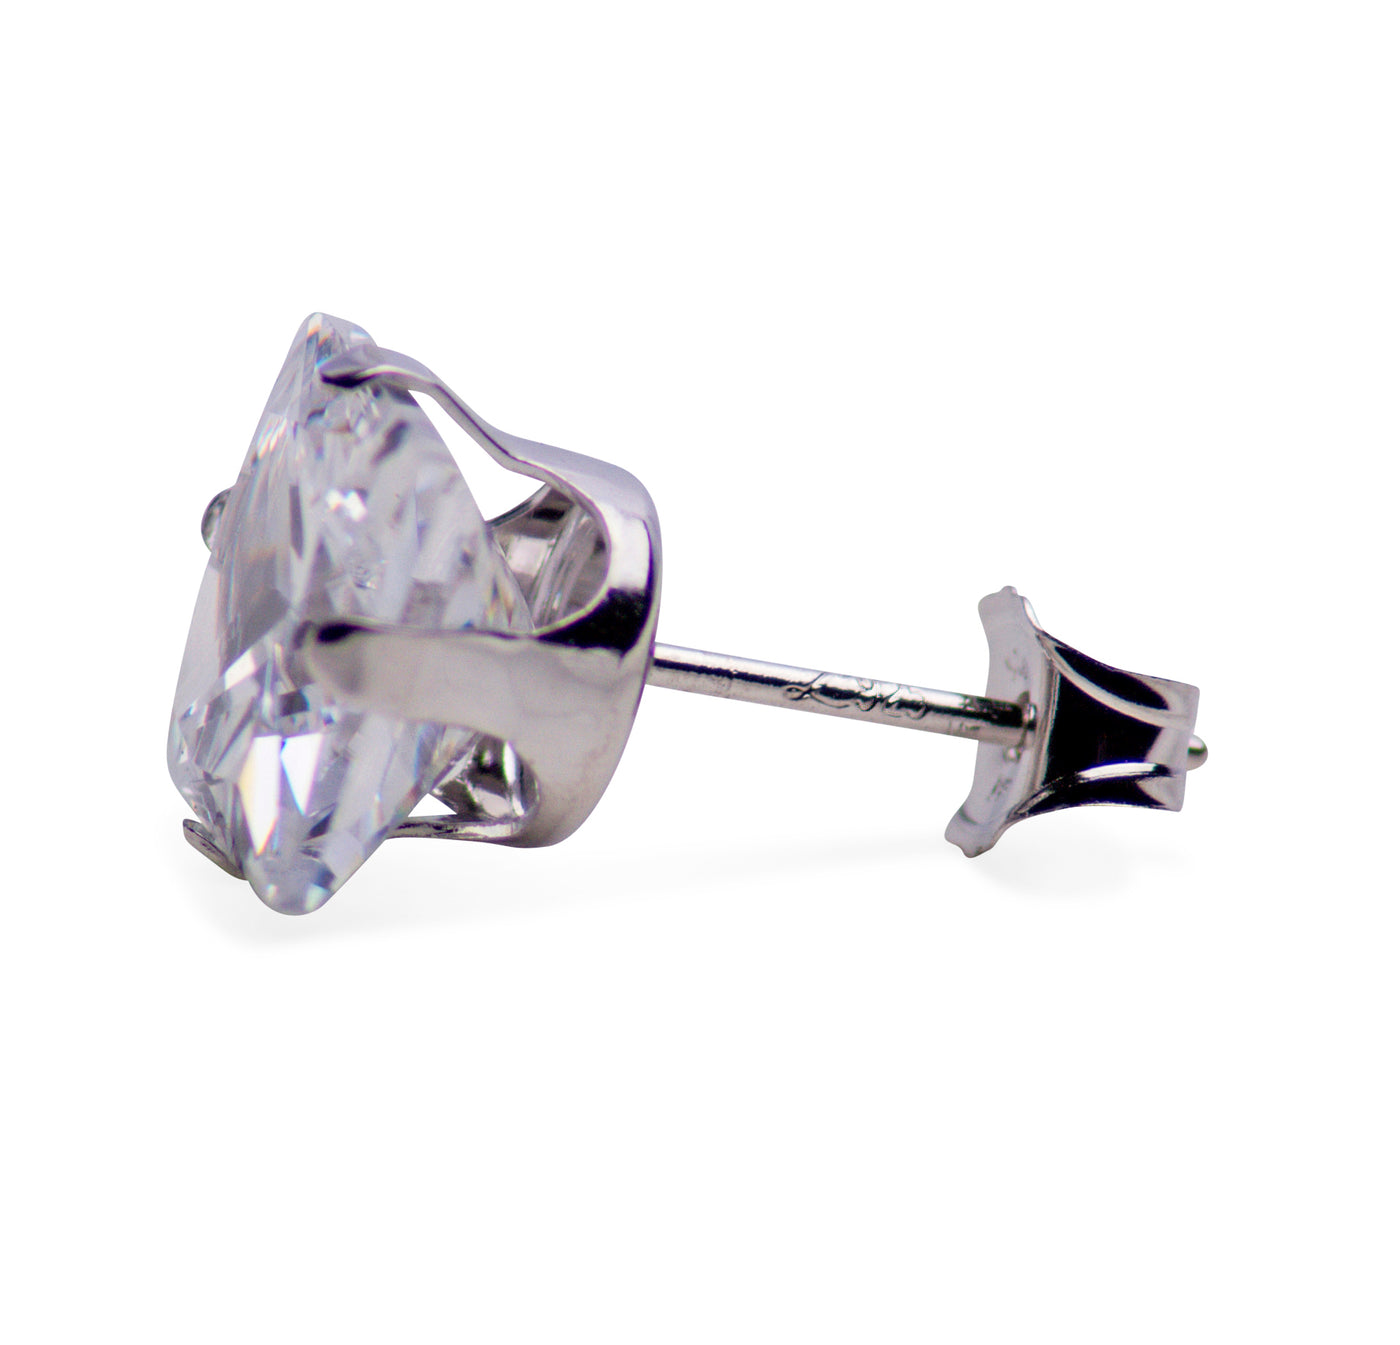 Princess Cut Cubic Zirconia Sterling Silver Earrings | SilverAndGold